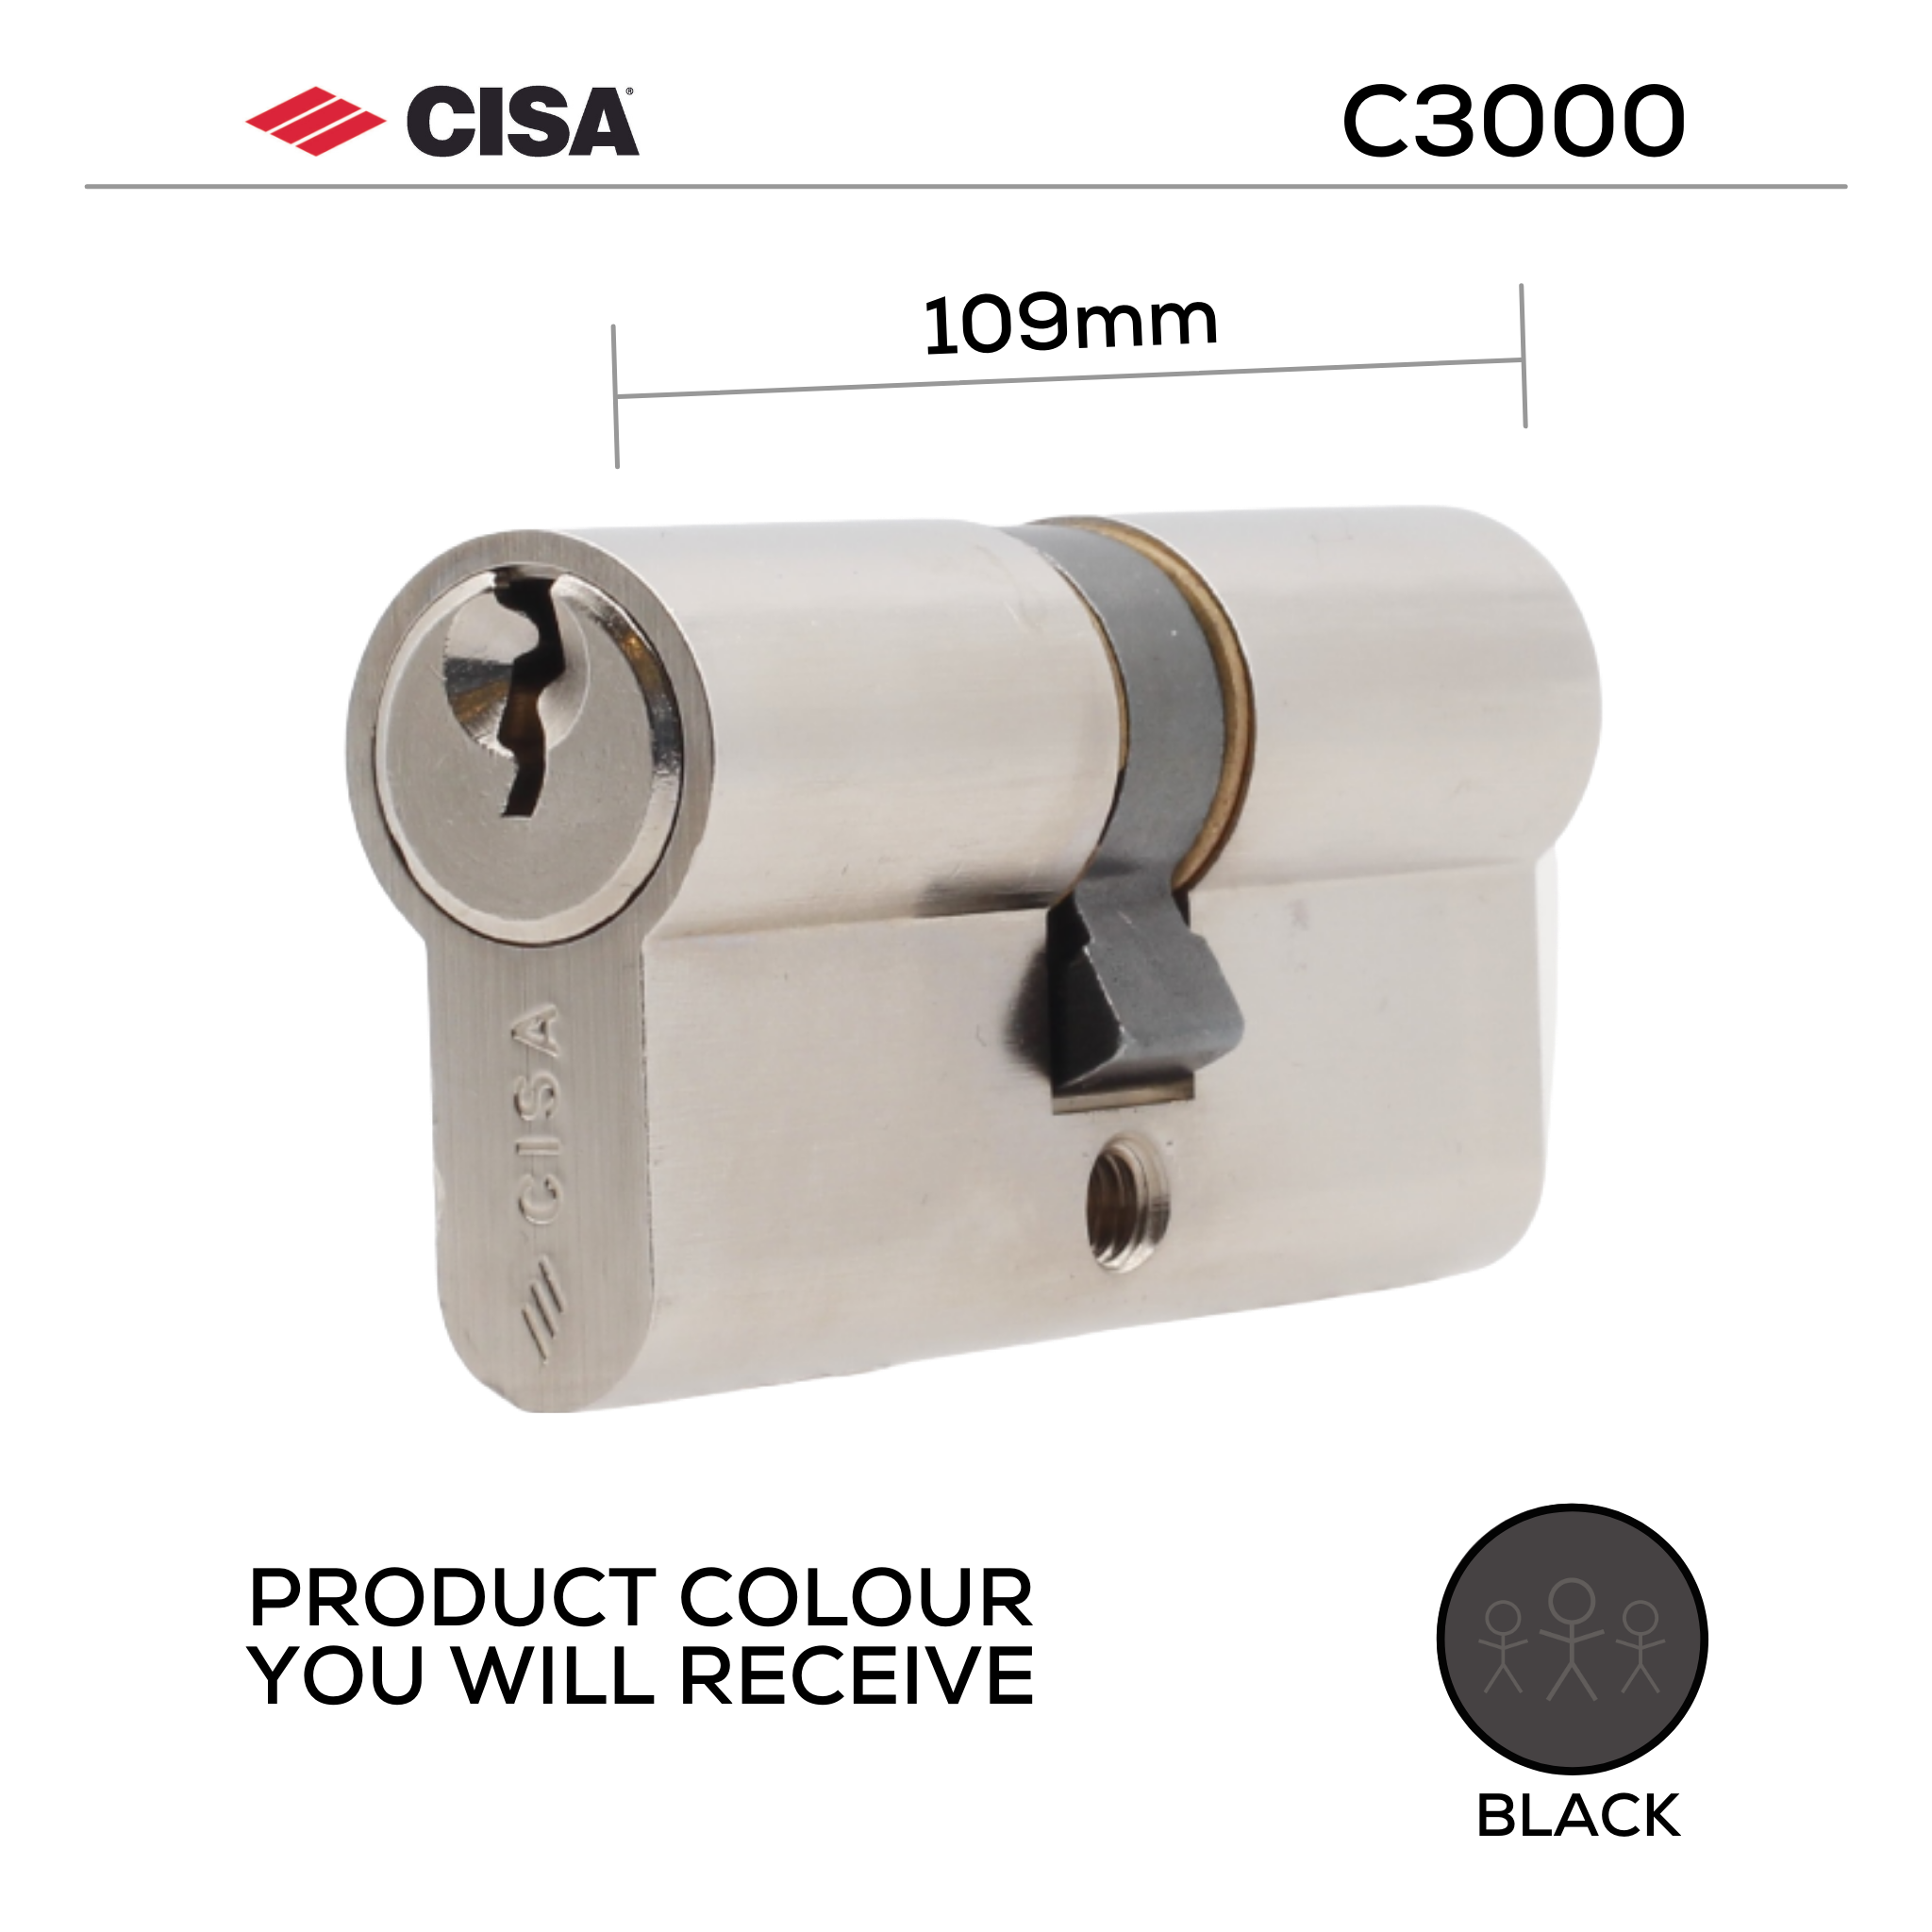 0N310-70-00-BLK-KD, 109mm - 54.5/54.5, Double Cylinder, C3000, Key to Key, Keyed to Differ (Standard), 3 Keys, 6 Pin, Black, CISA